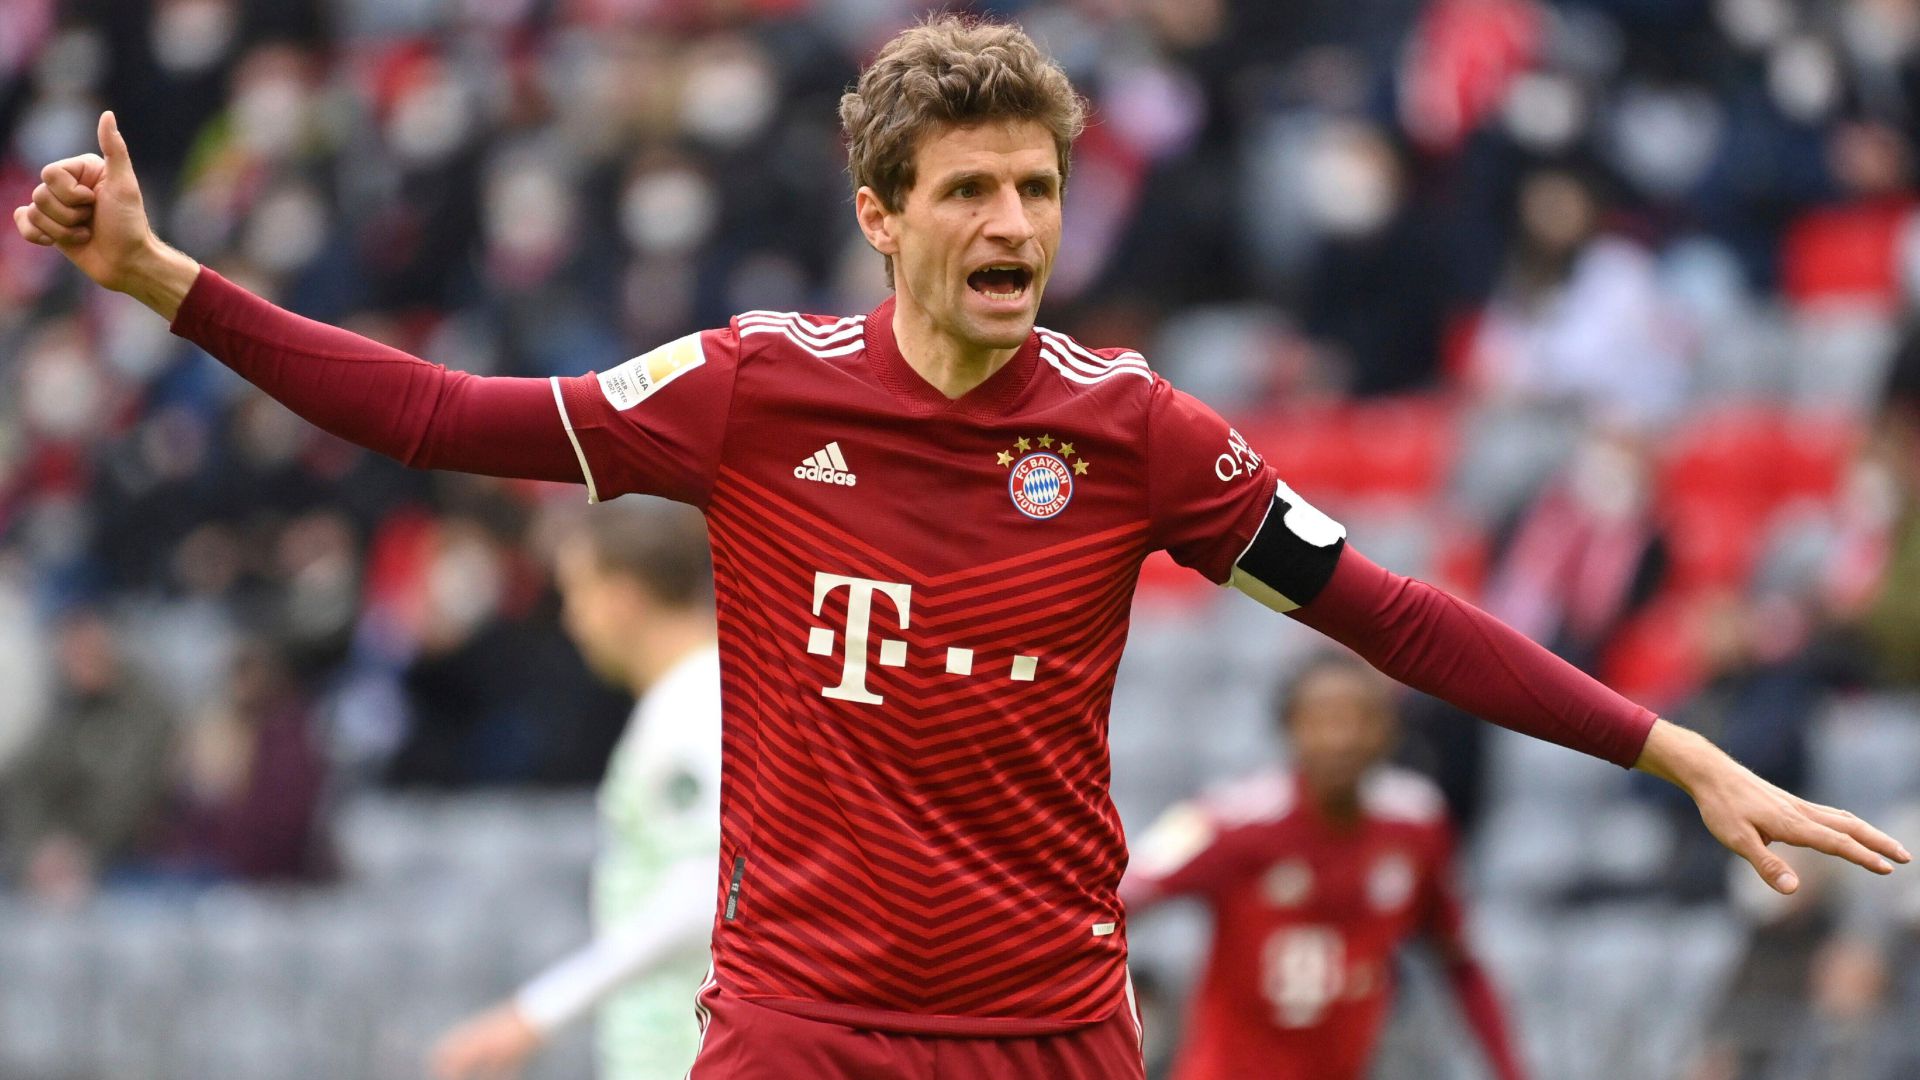 FIFA 22 best teams guide sees Bayern Munich claim top spot